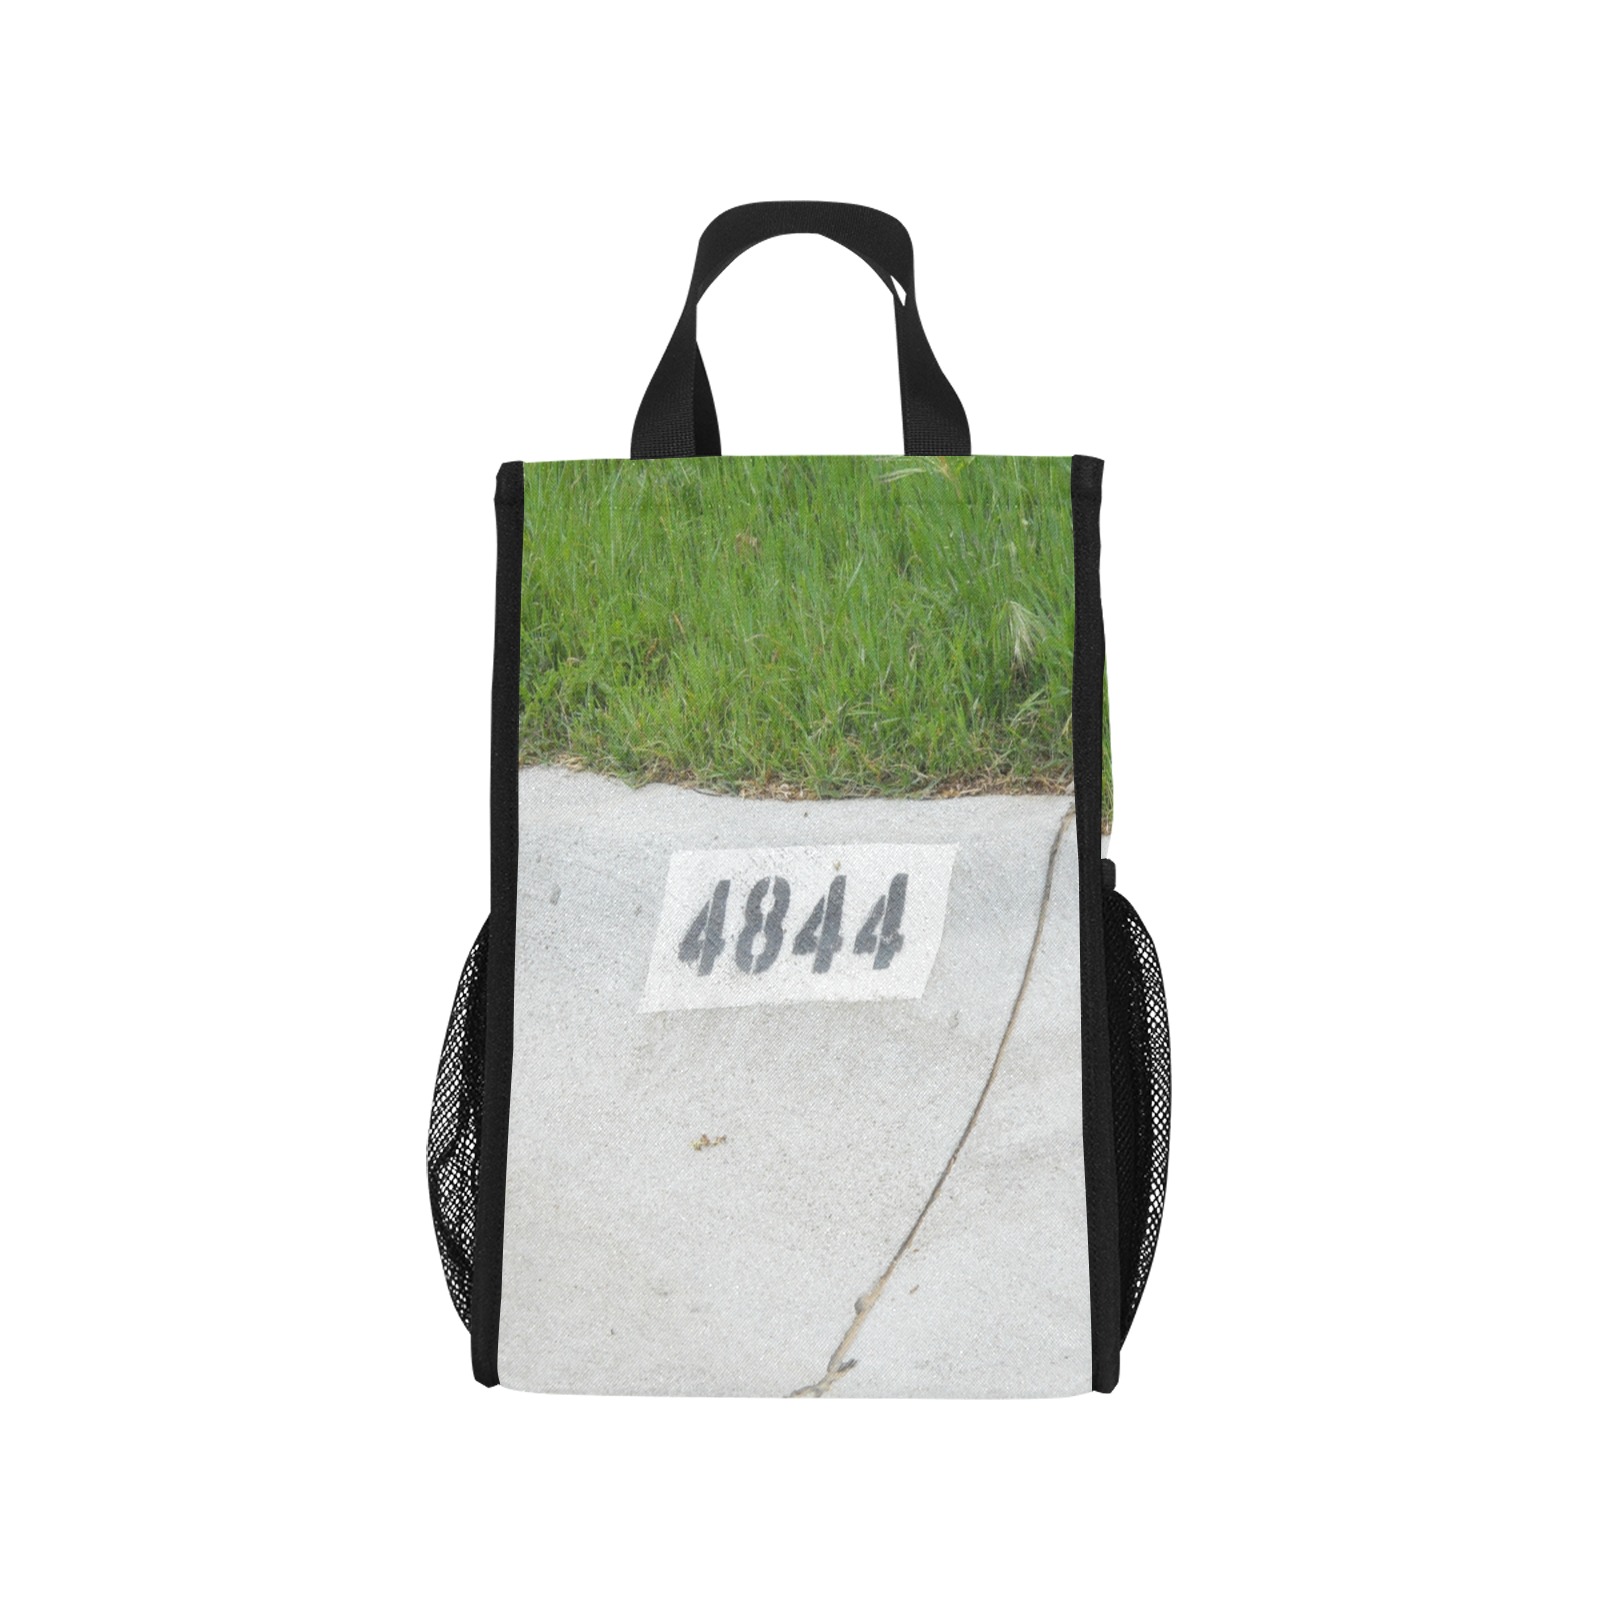 Street Number 4844 Foldable Picnic Tote Bag (Model 1718)